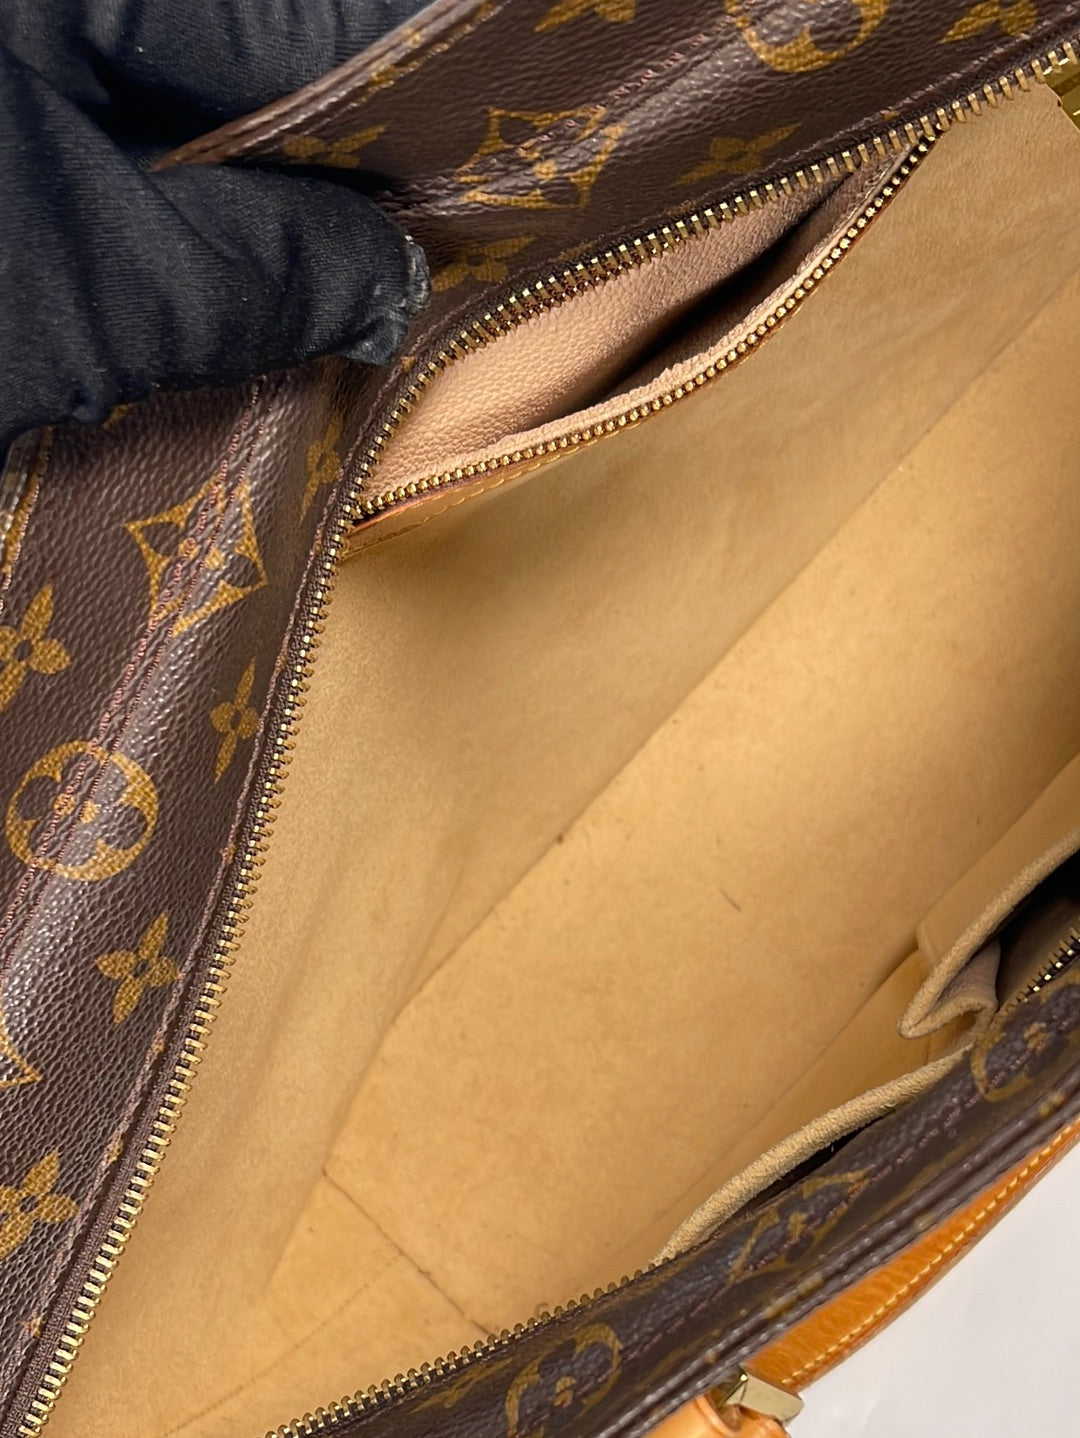 sold‼️  Vintage shopping bags, Louis vuitton monogram, Louis